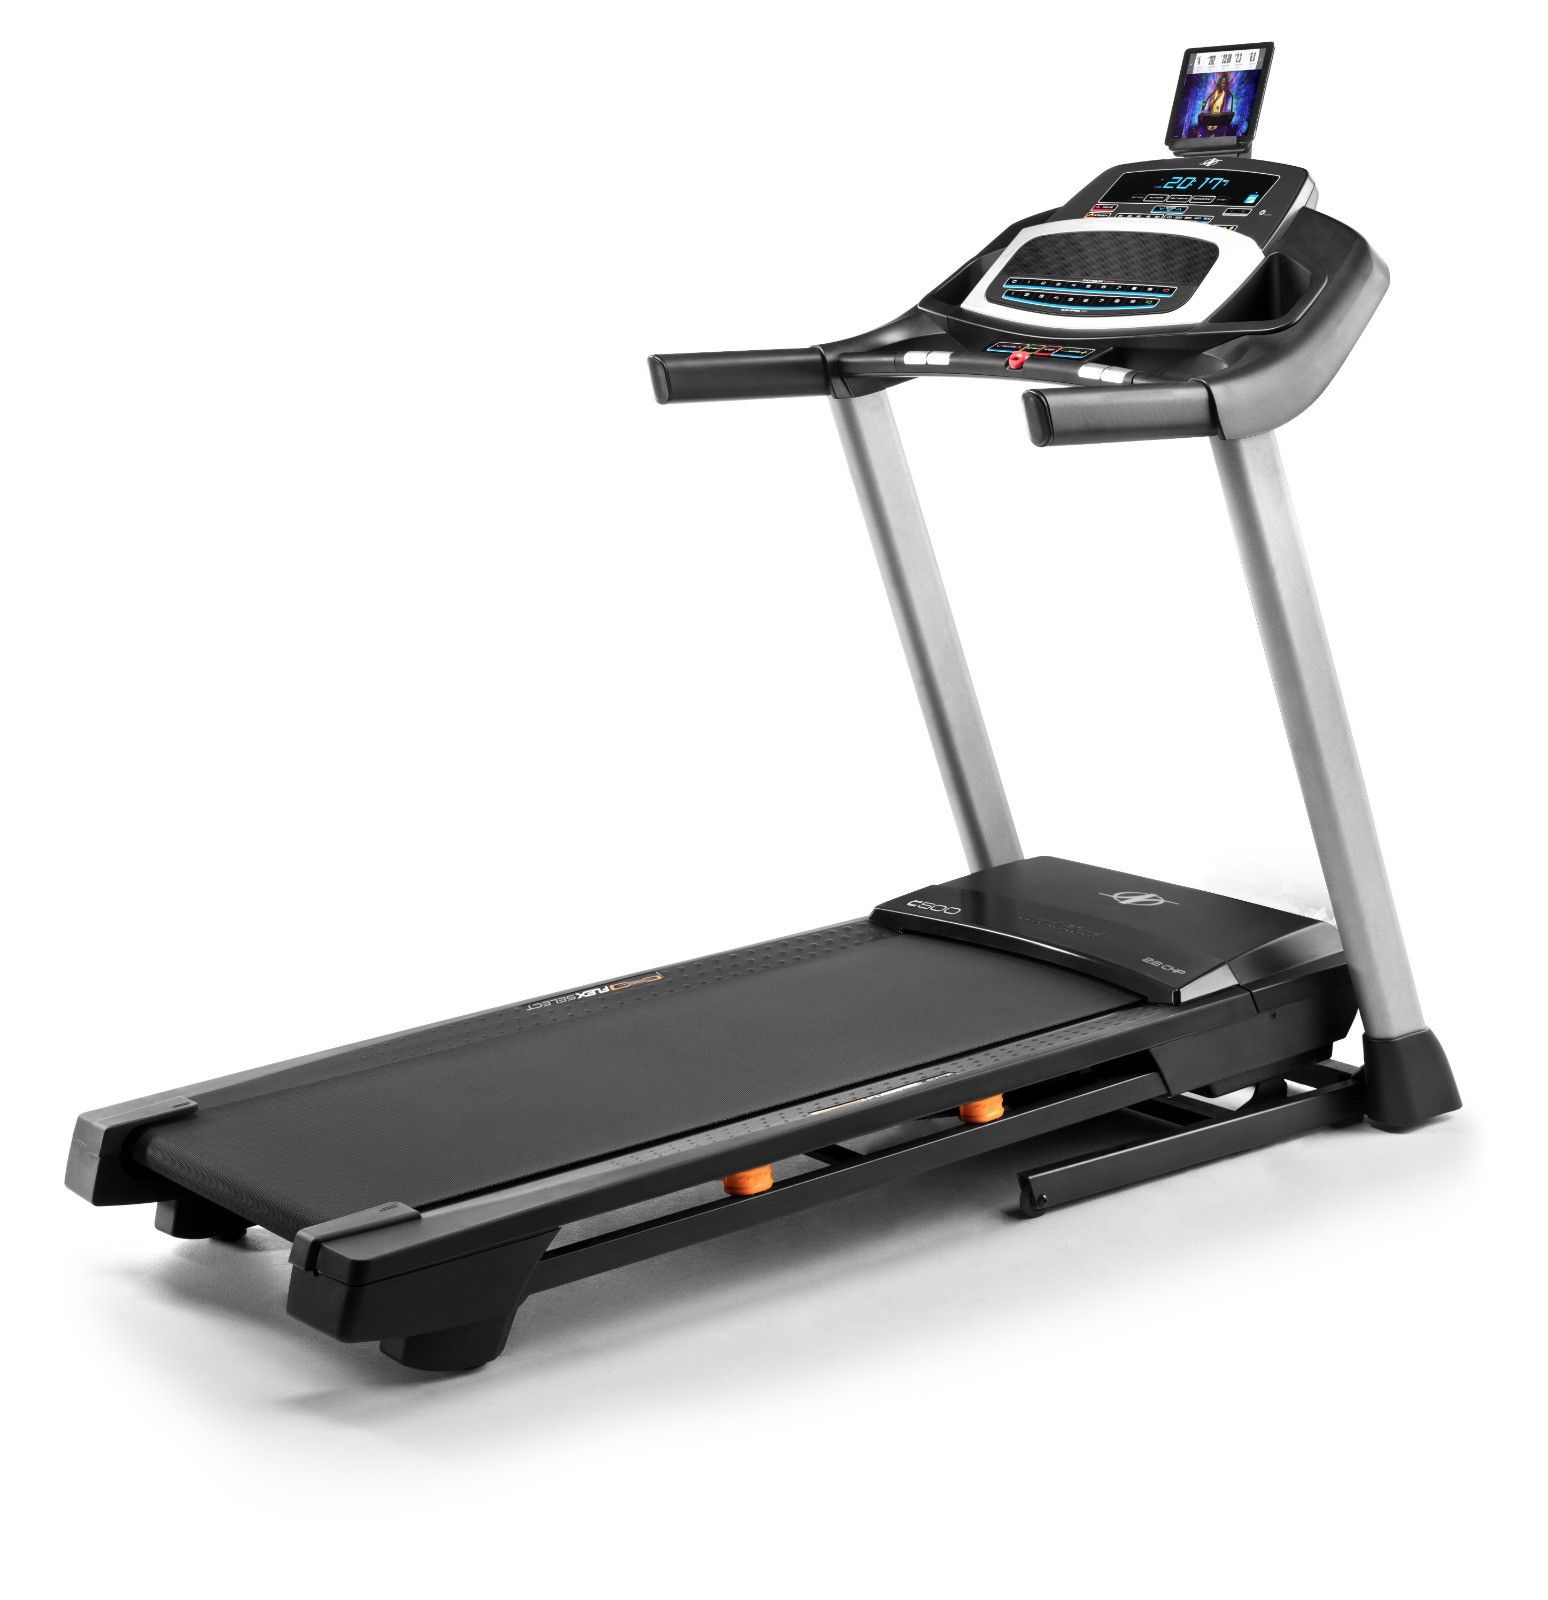 NordicTrack C500 Folding Treadmill, iFit Coach Compatible Description: